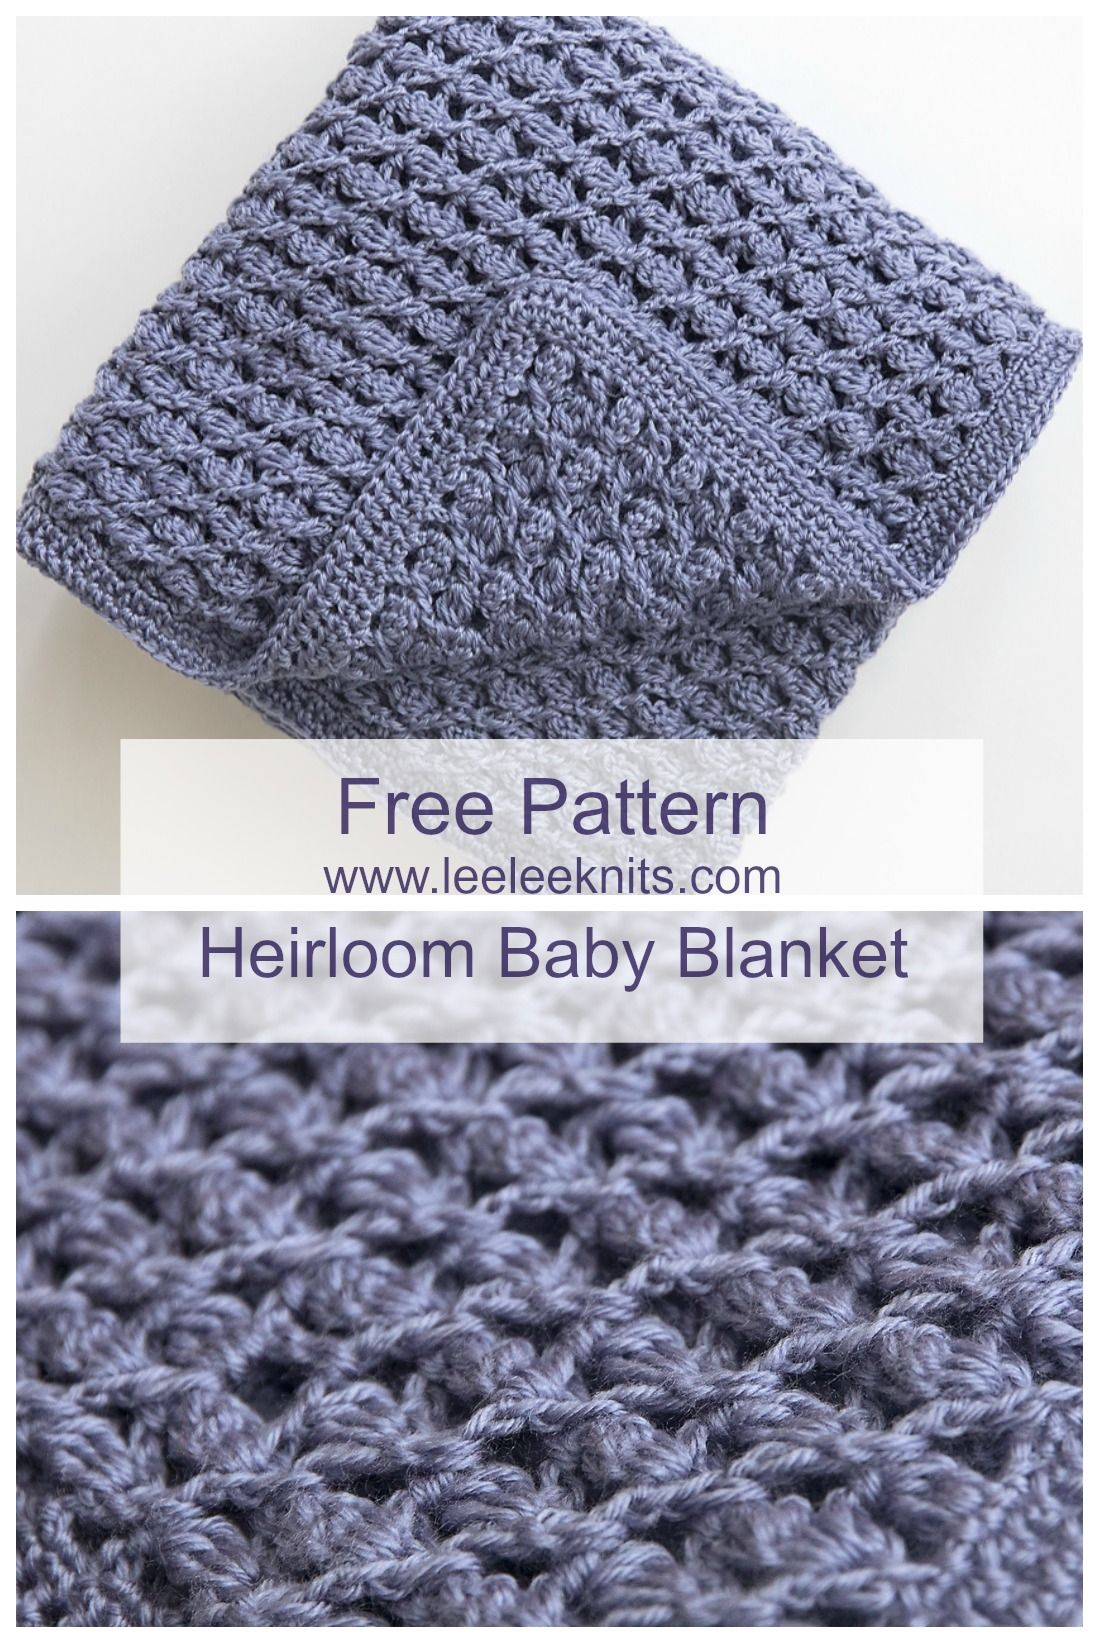 Free Baby Knitting Patterns Pinterest Crochet Patterns For Ba Blankets Free Heirloom Ba Blanket Crochet